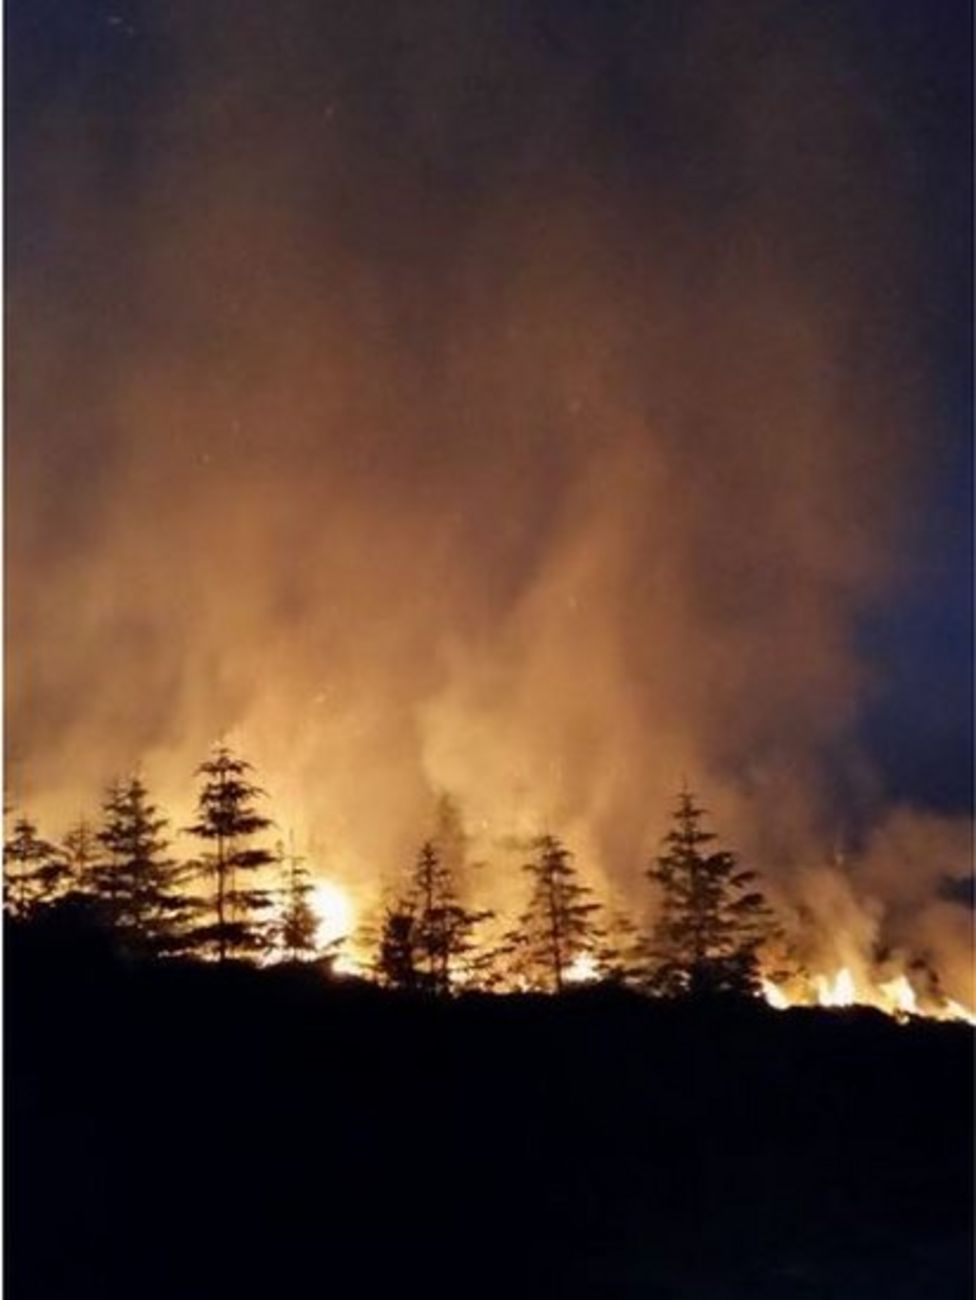 Crews tackle wildfire at Sutherland tree plantation - BBC News